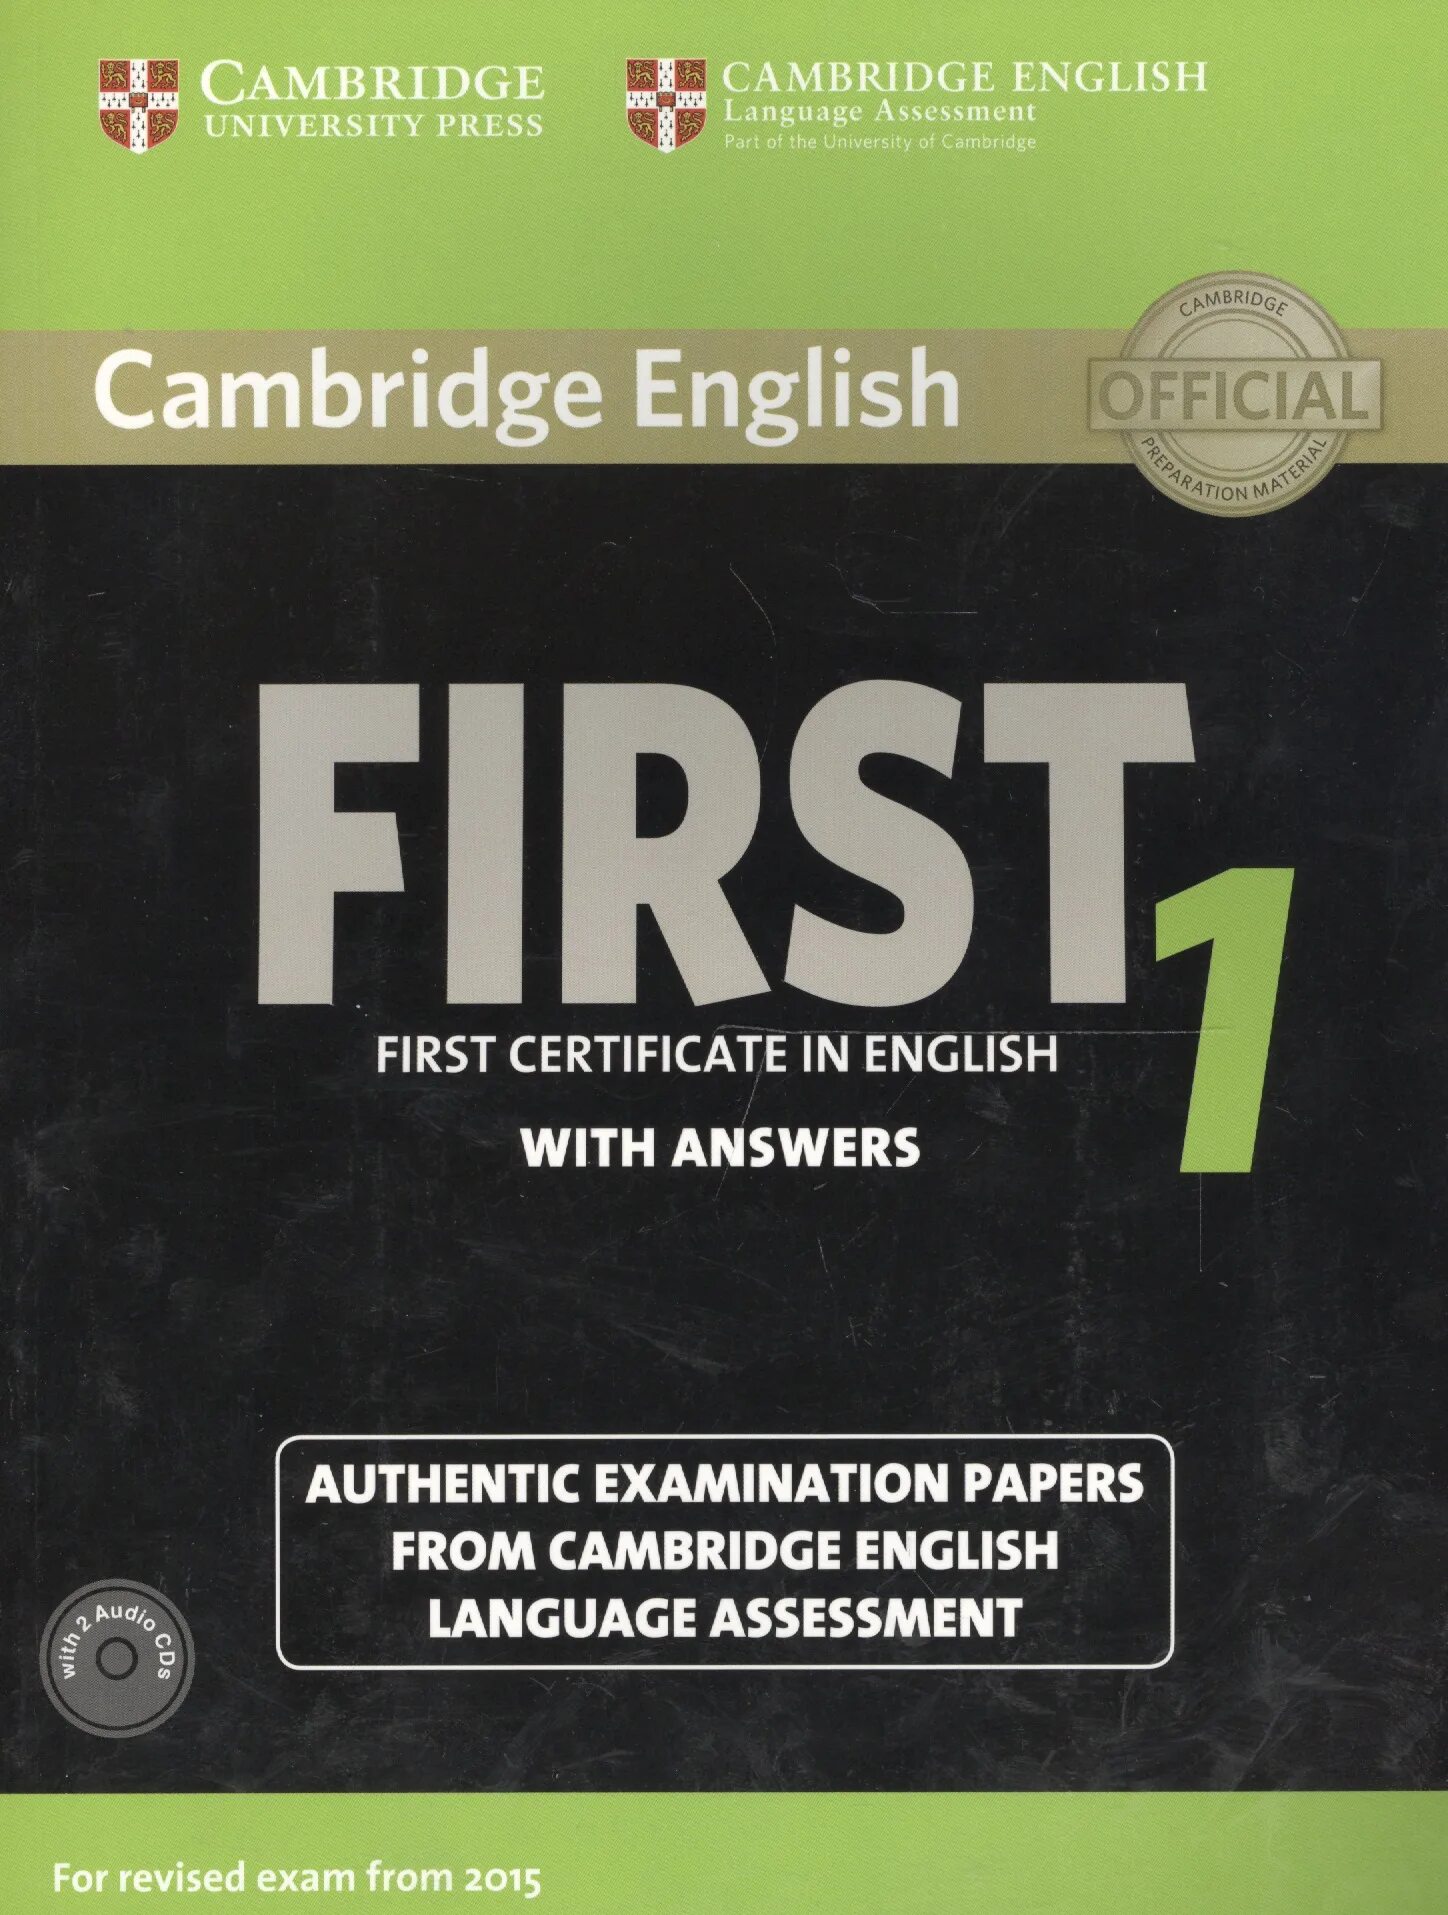 Cambridge 1 answers